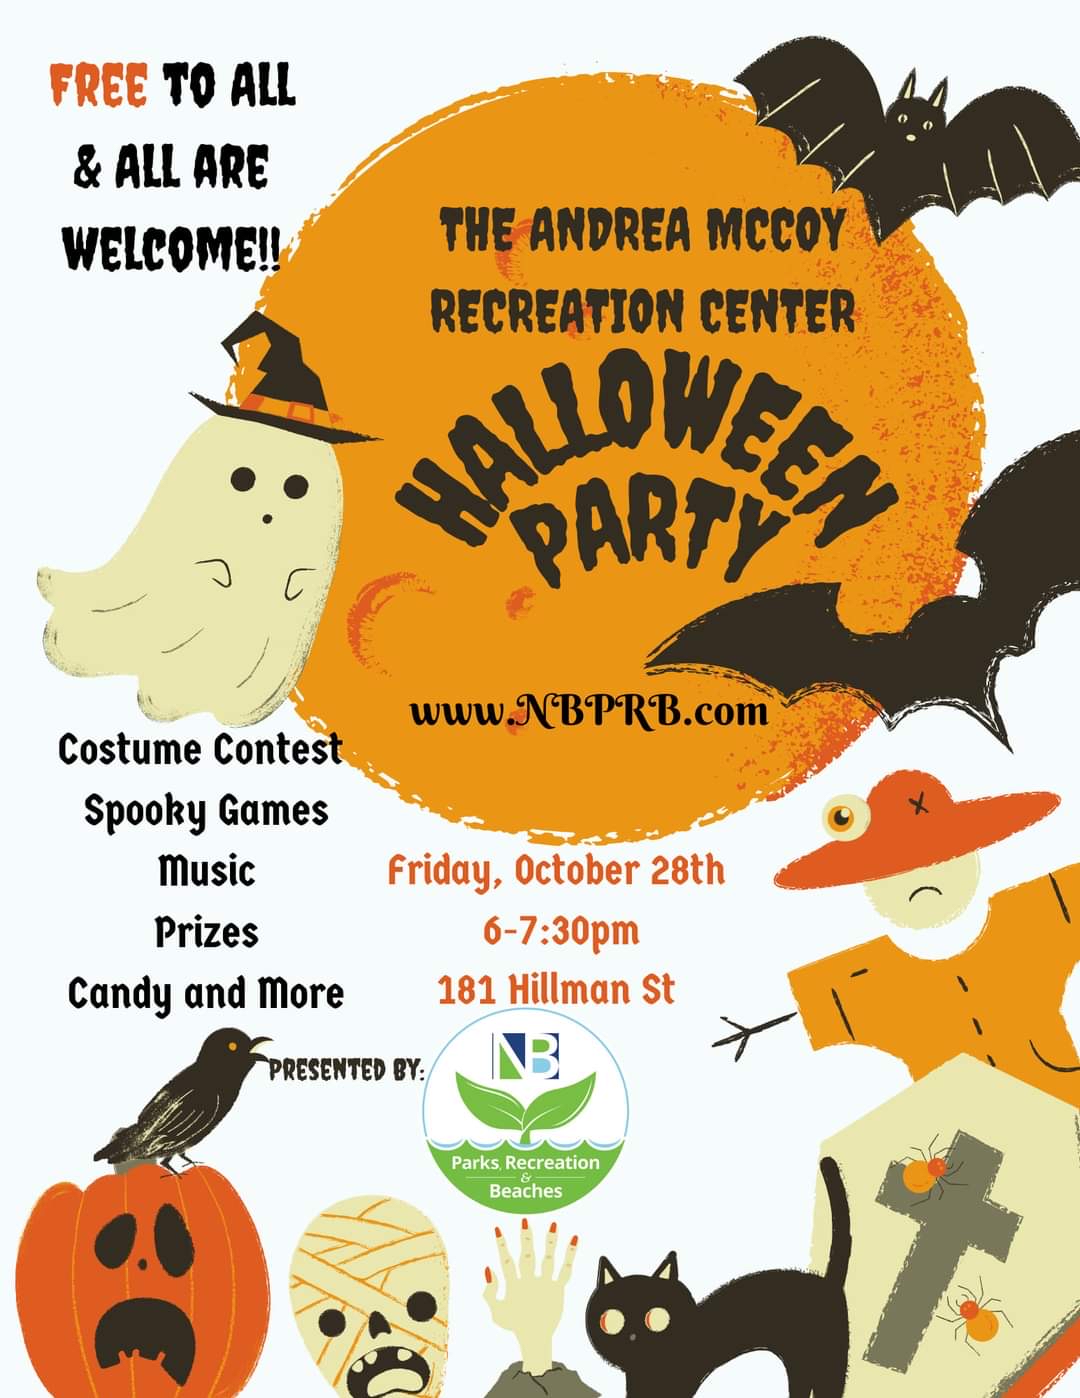 NBPD Union sponsors Andrea Mccoy Halloween party